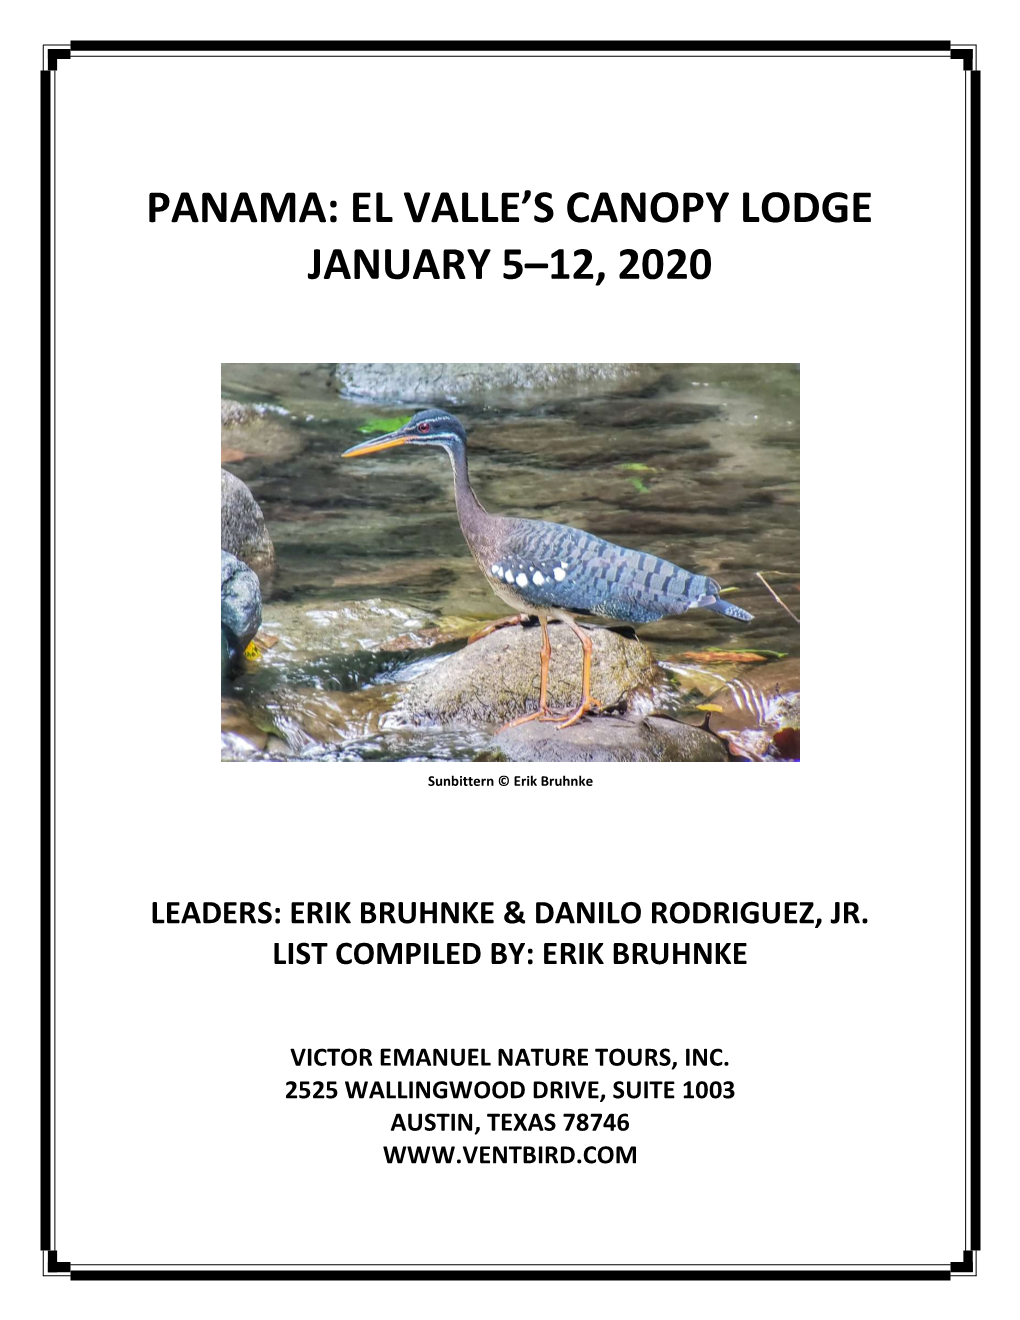 Panama: El Valle's Canopy Lodge